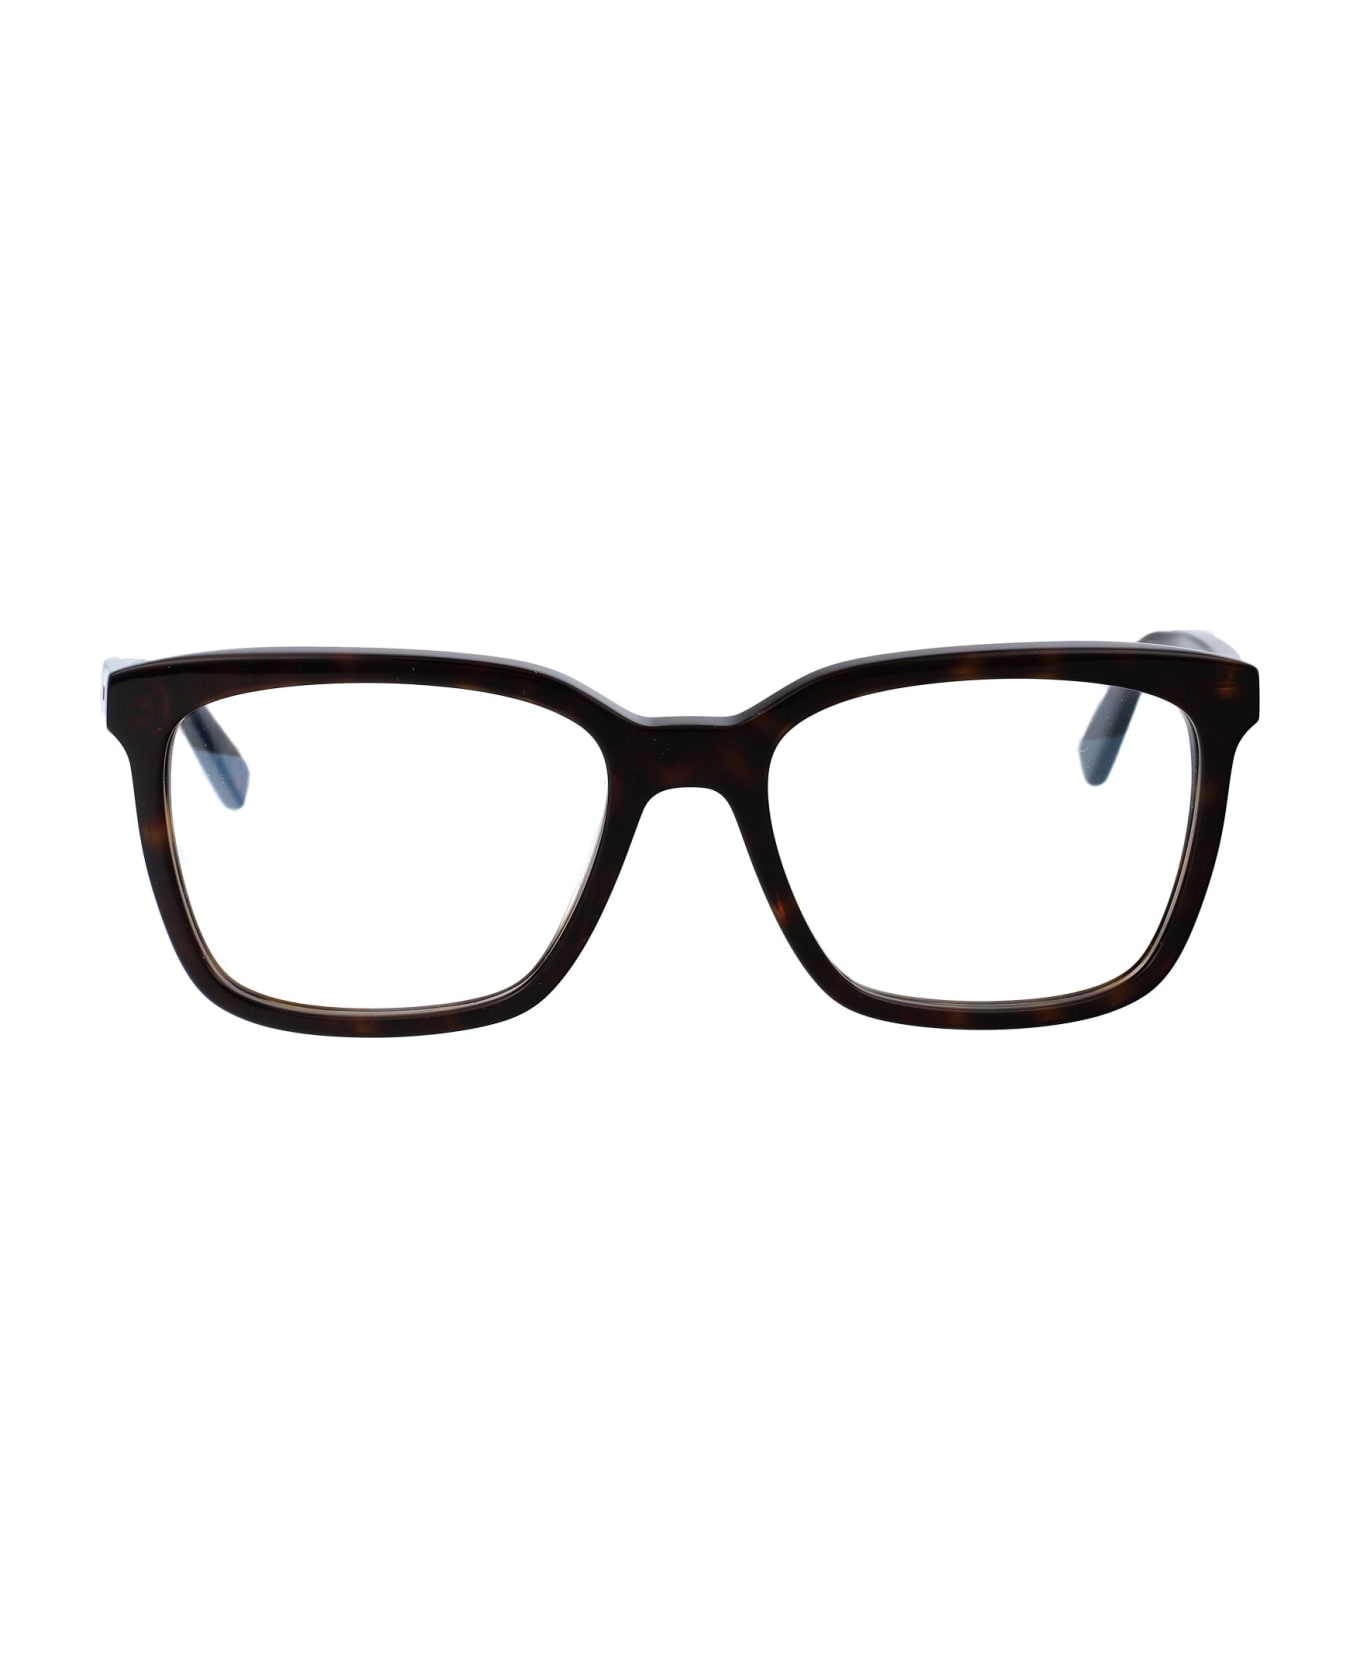 Saint Laurent Eyewear Sl 672 Glasses - 002 HAVANA HAVANA TRANSPARENT